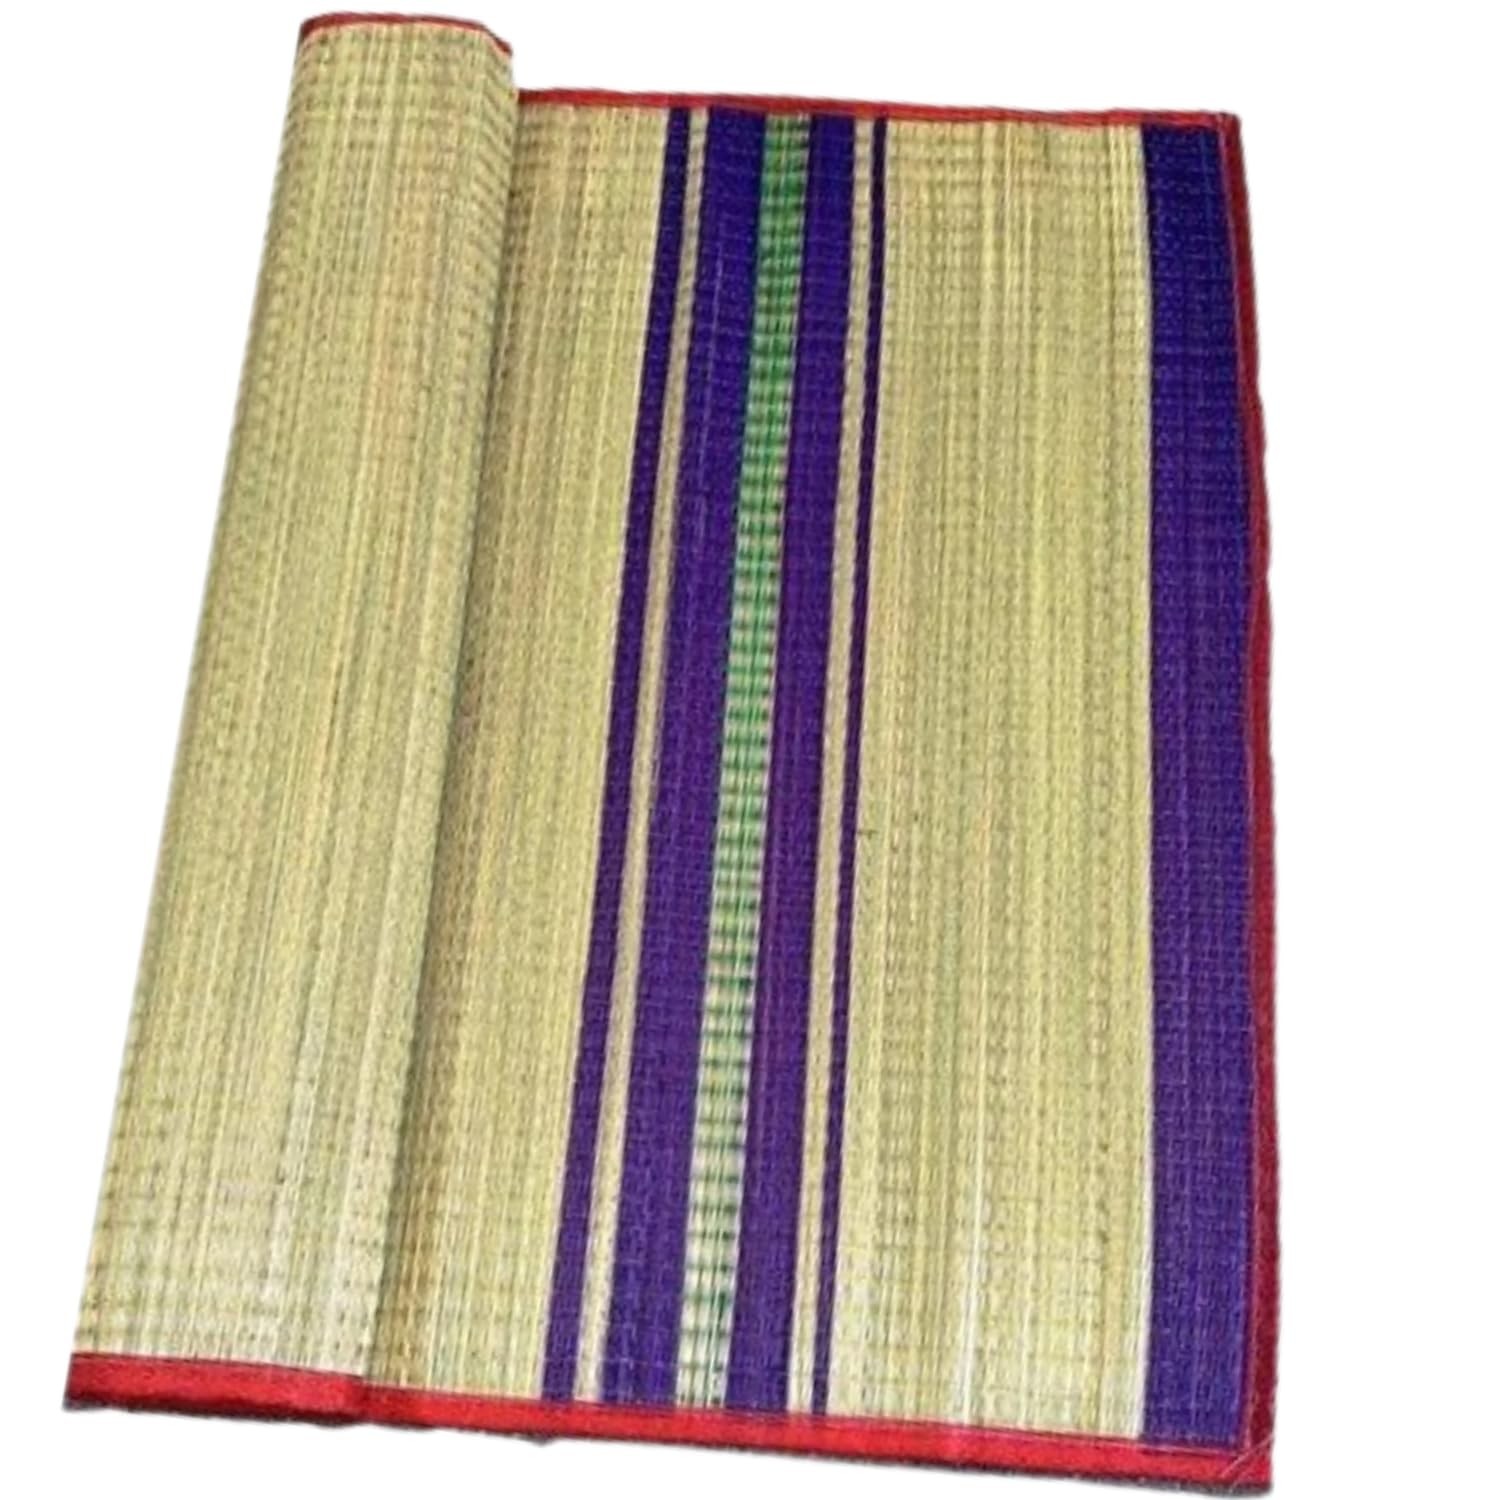 Korai Grass Mat 3.5 X 6 feet (42 x 72 inch) Large Size Versatile Bed Mats/Yoga Grass Mat/Floor Mat/Sleeping Mat/KoraiPai/Sleep Chatai Foldable Both Side Usable at Home